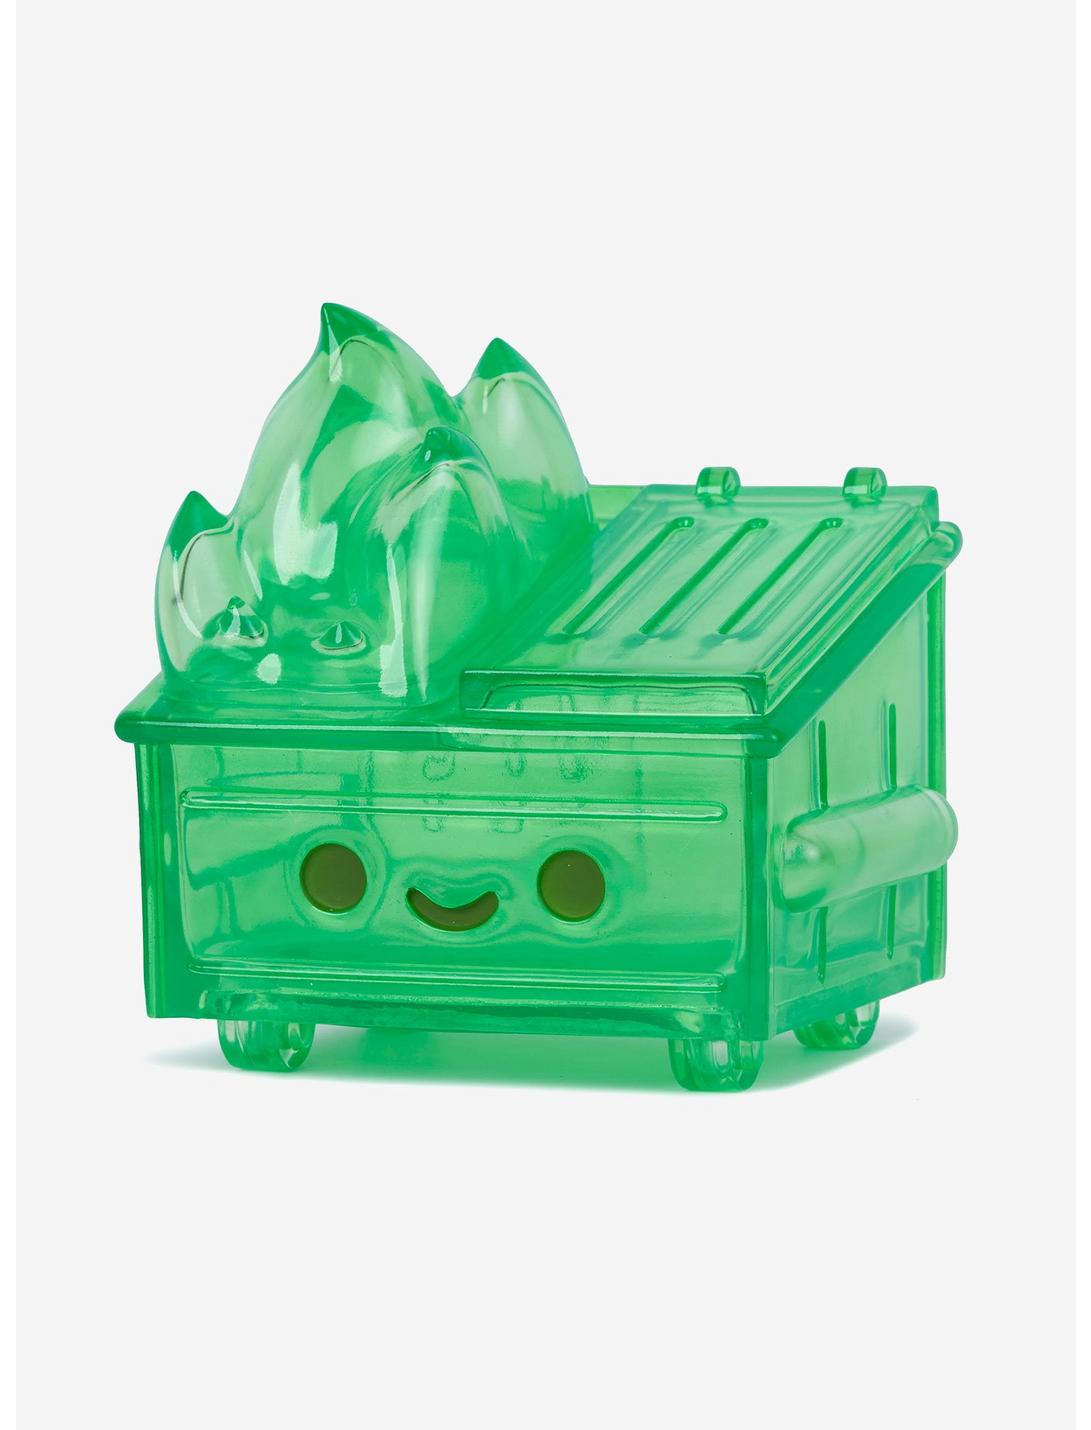 Dumpster Fire 100%Soft Vinyl Figure Slime Hot Topic Exclusive 504 Pieces 